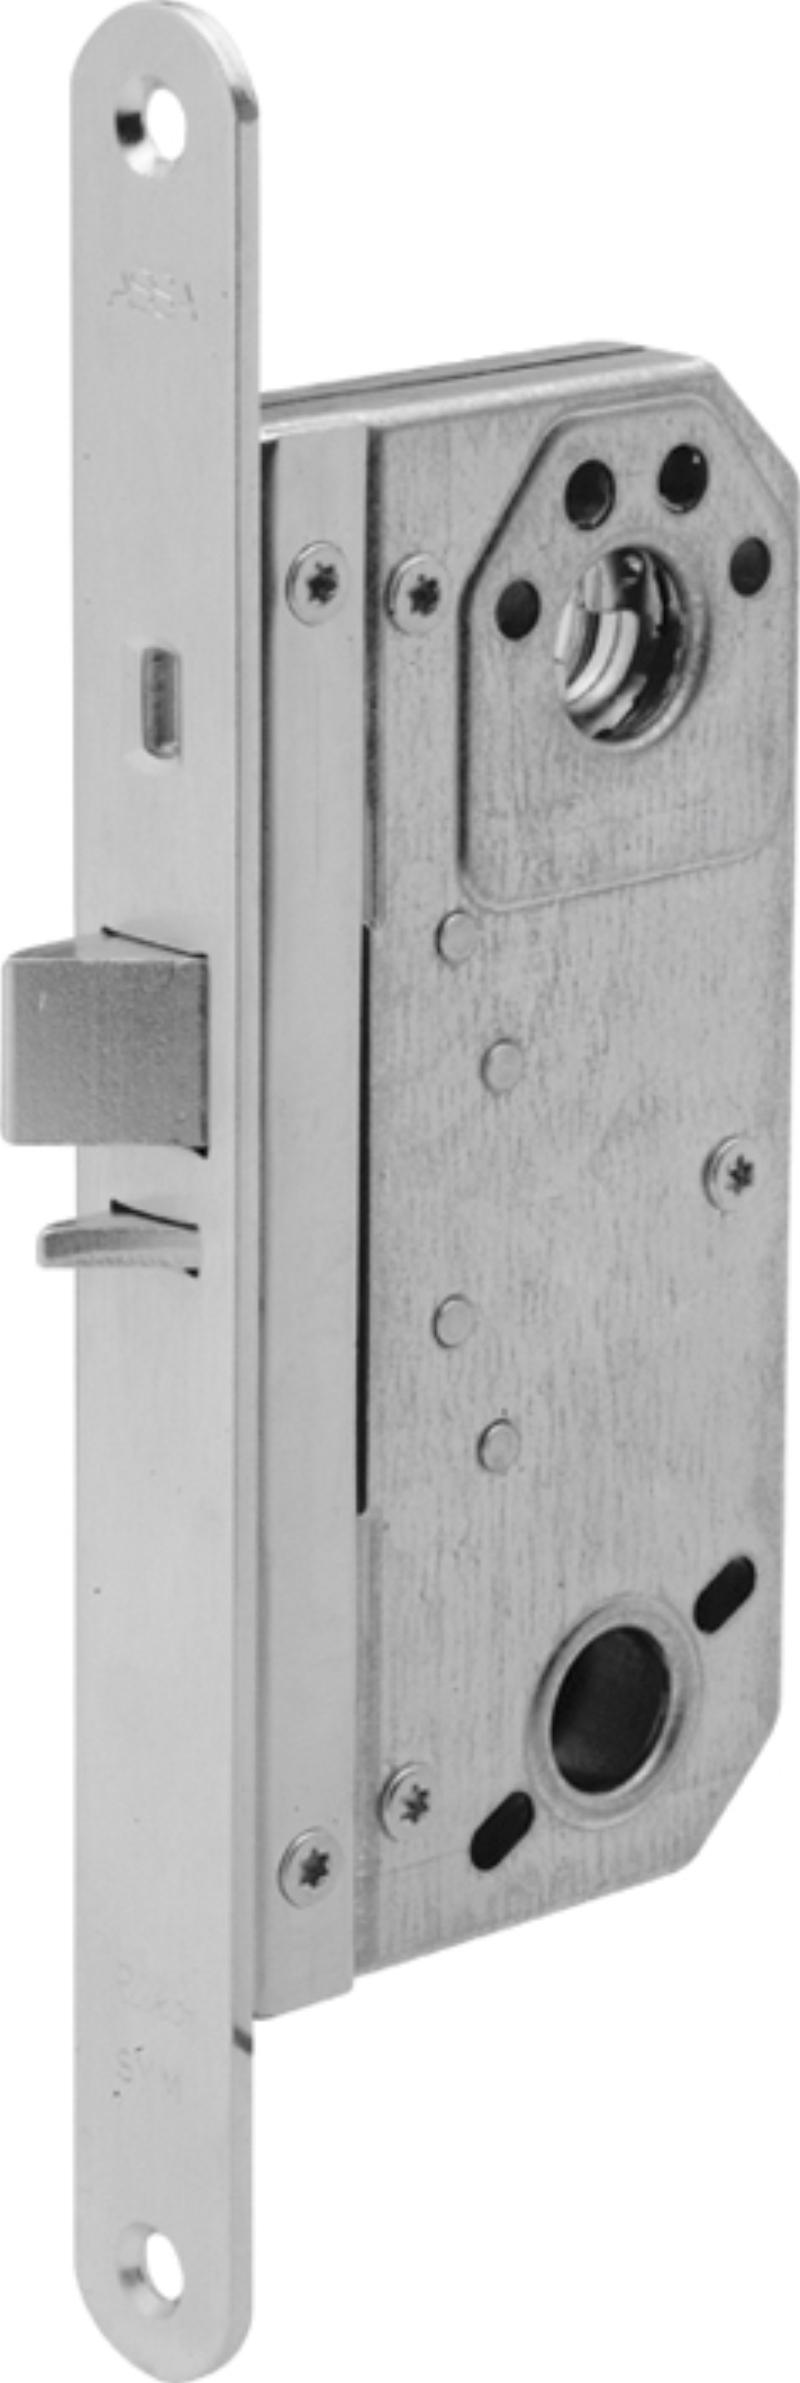 Assa lock case 6585 u/tin